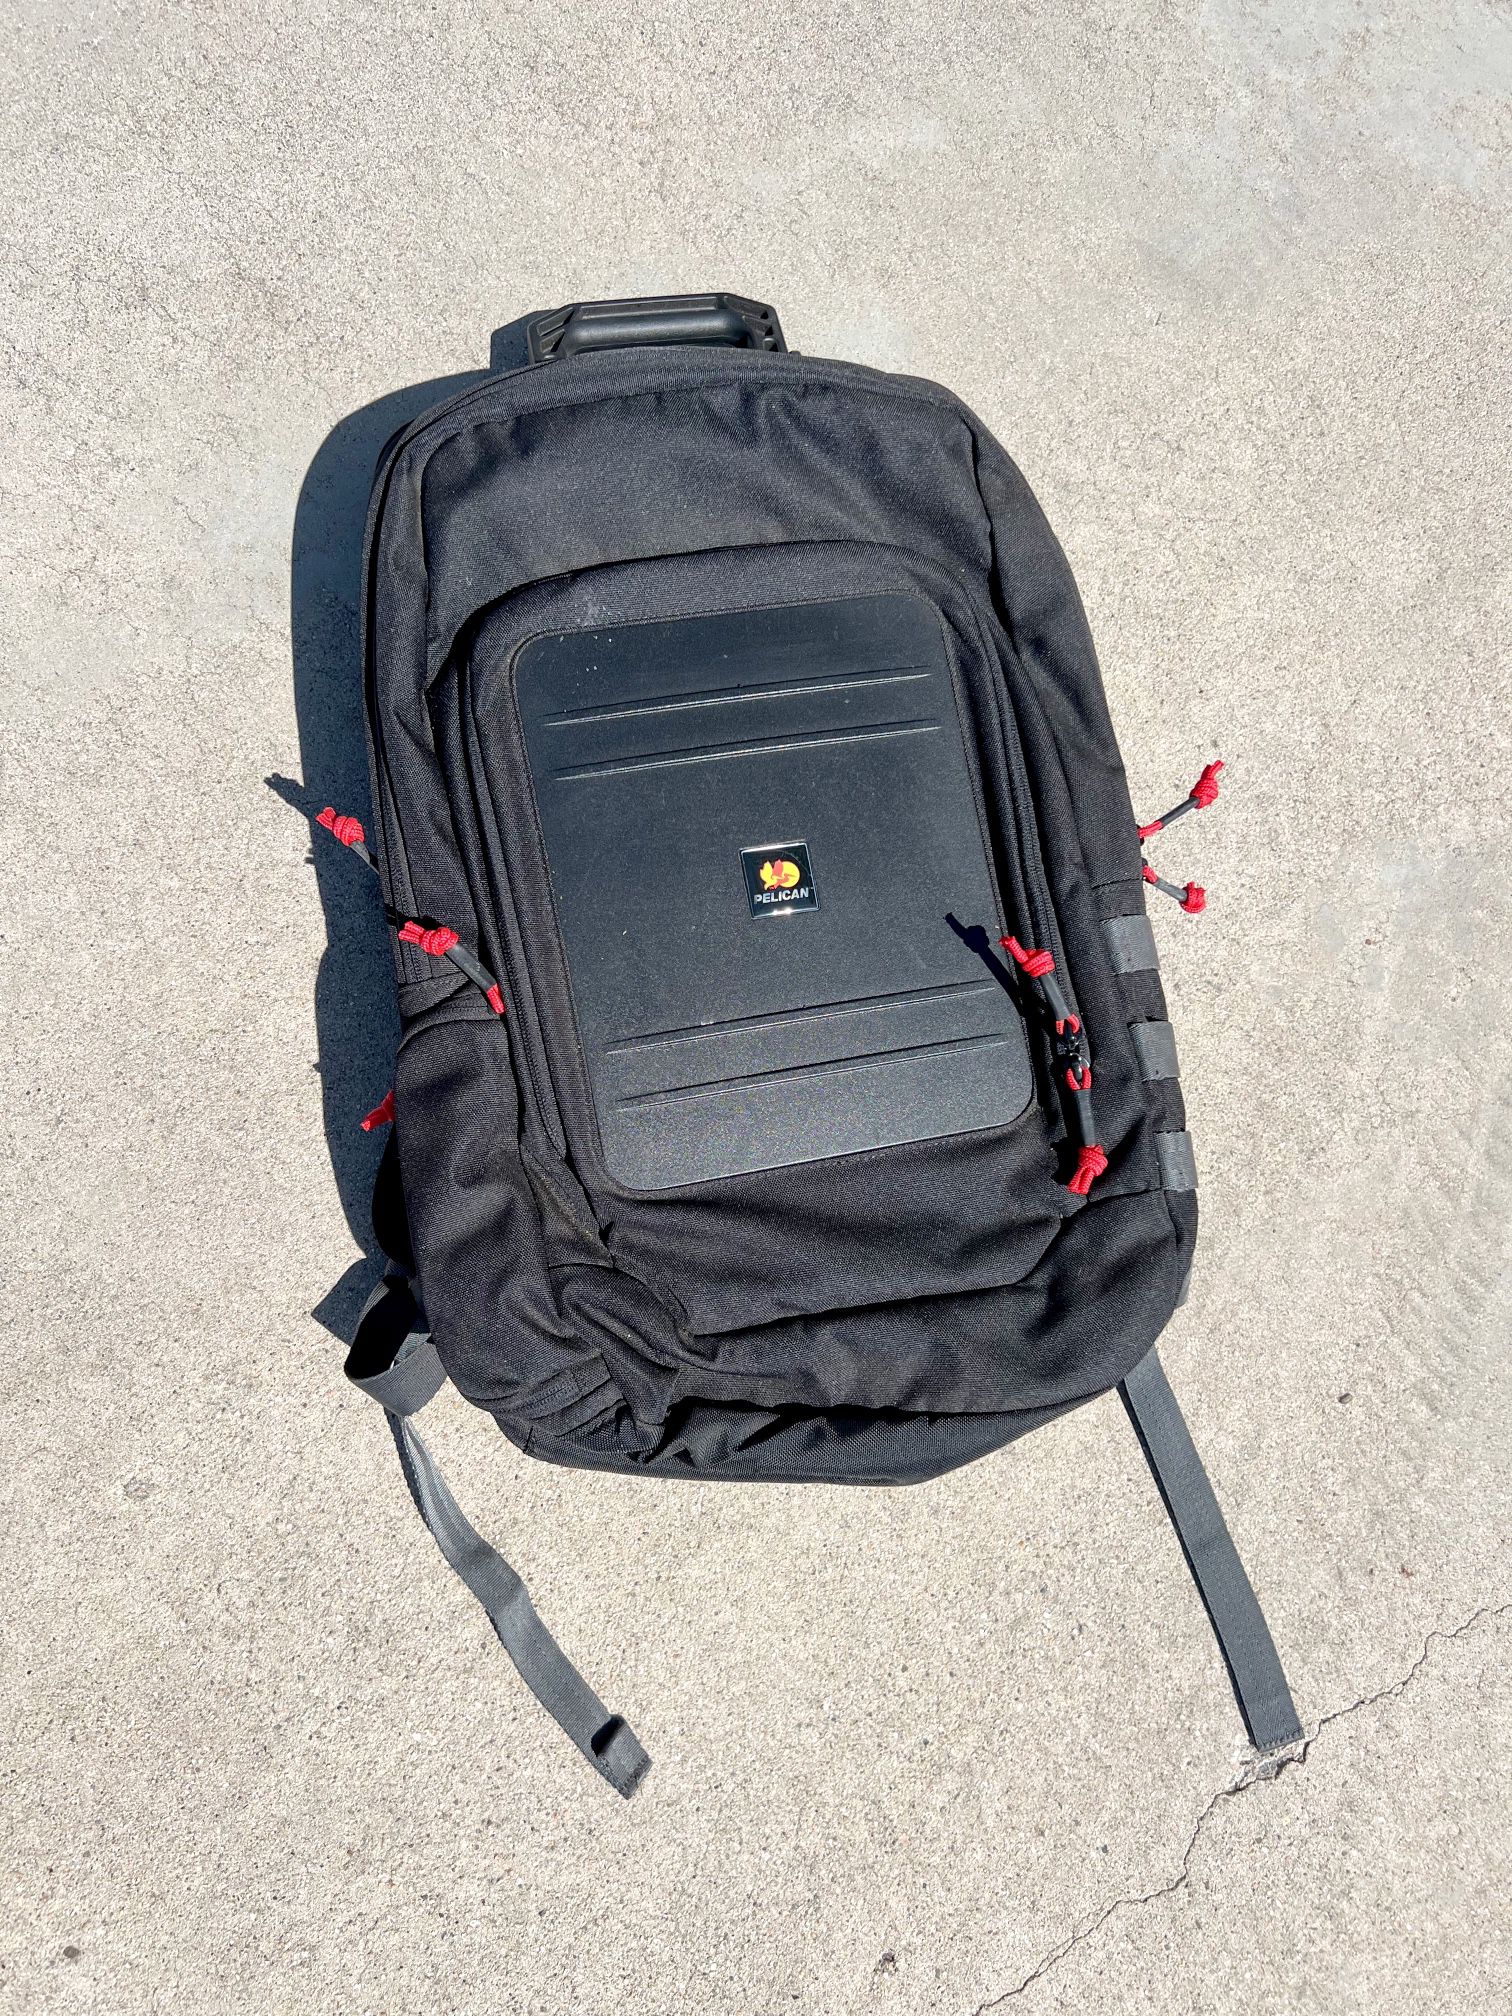 Pelican Laptop Case Backpack